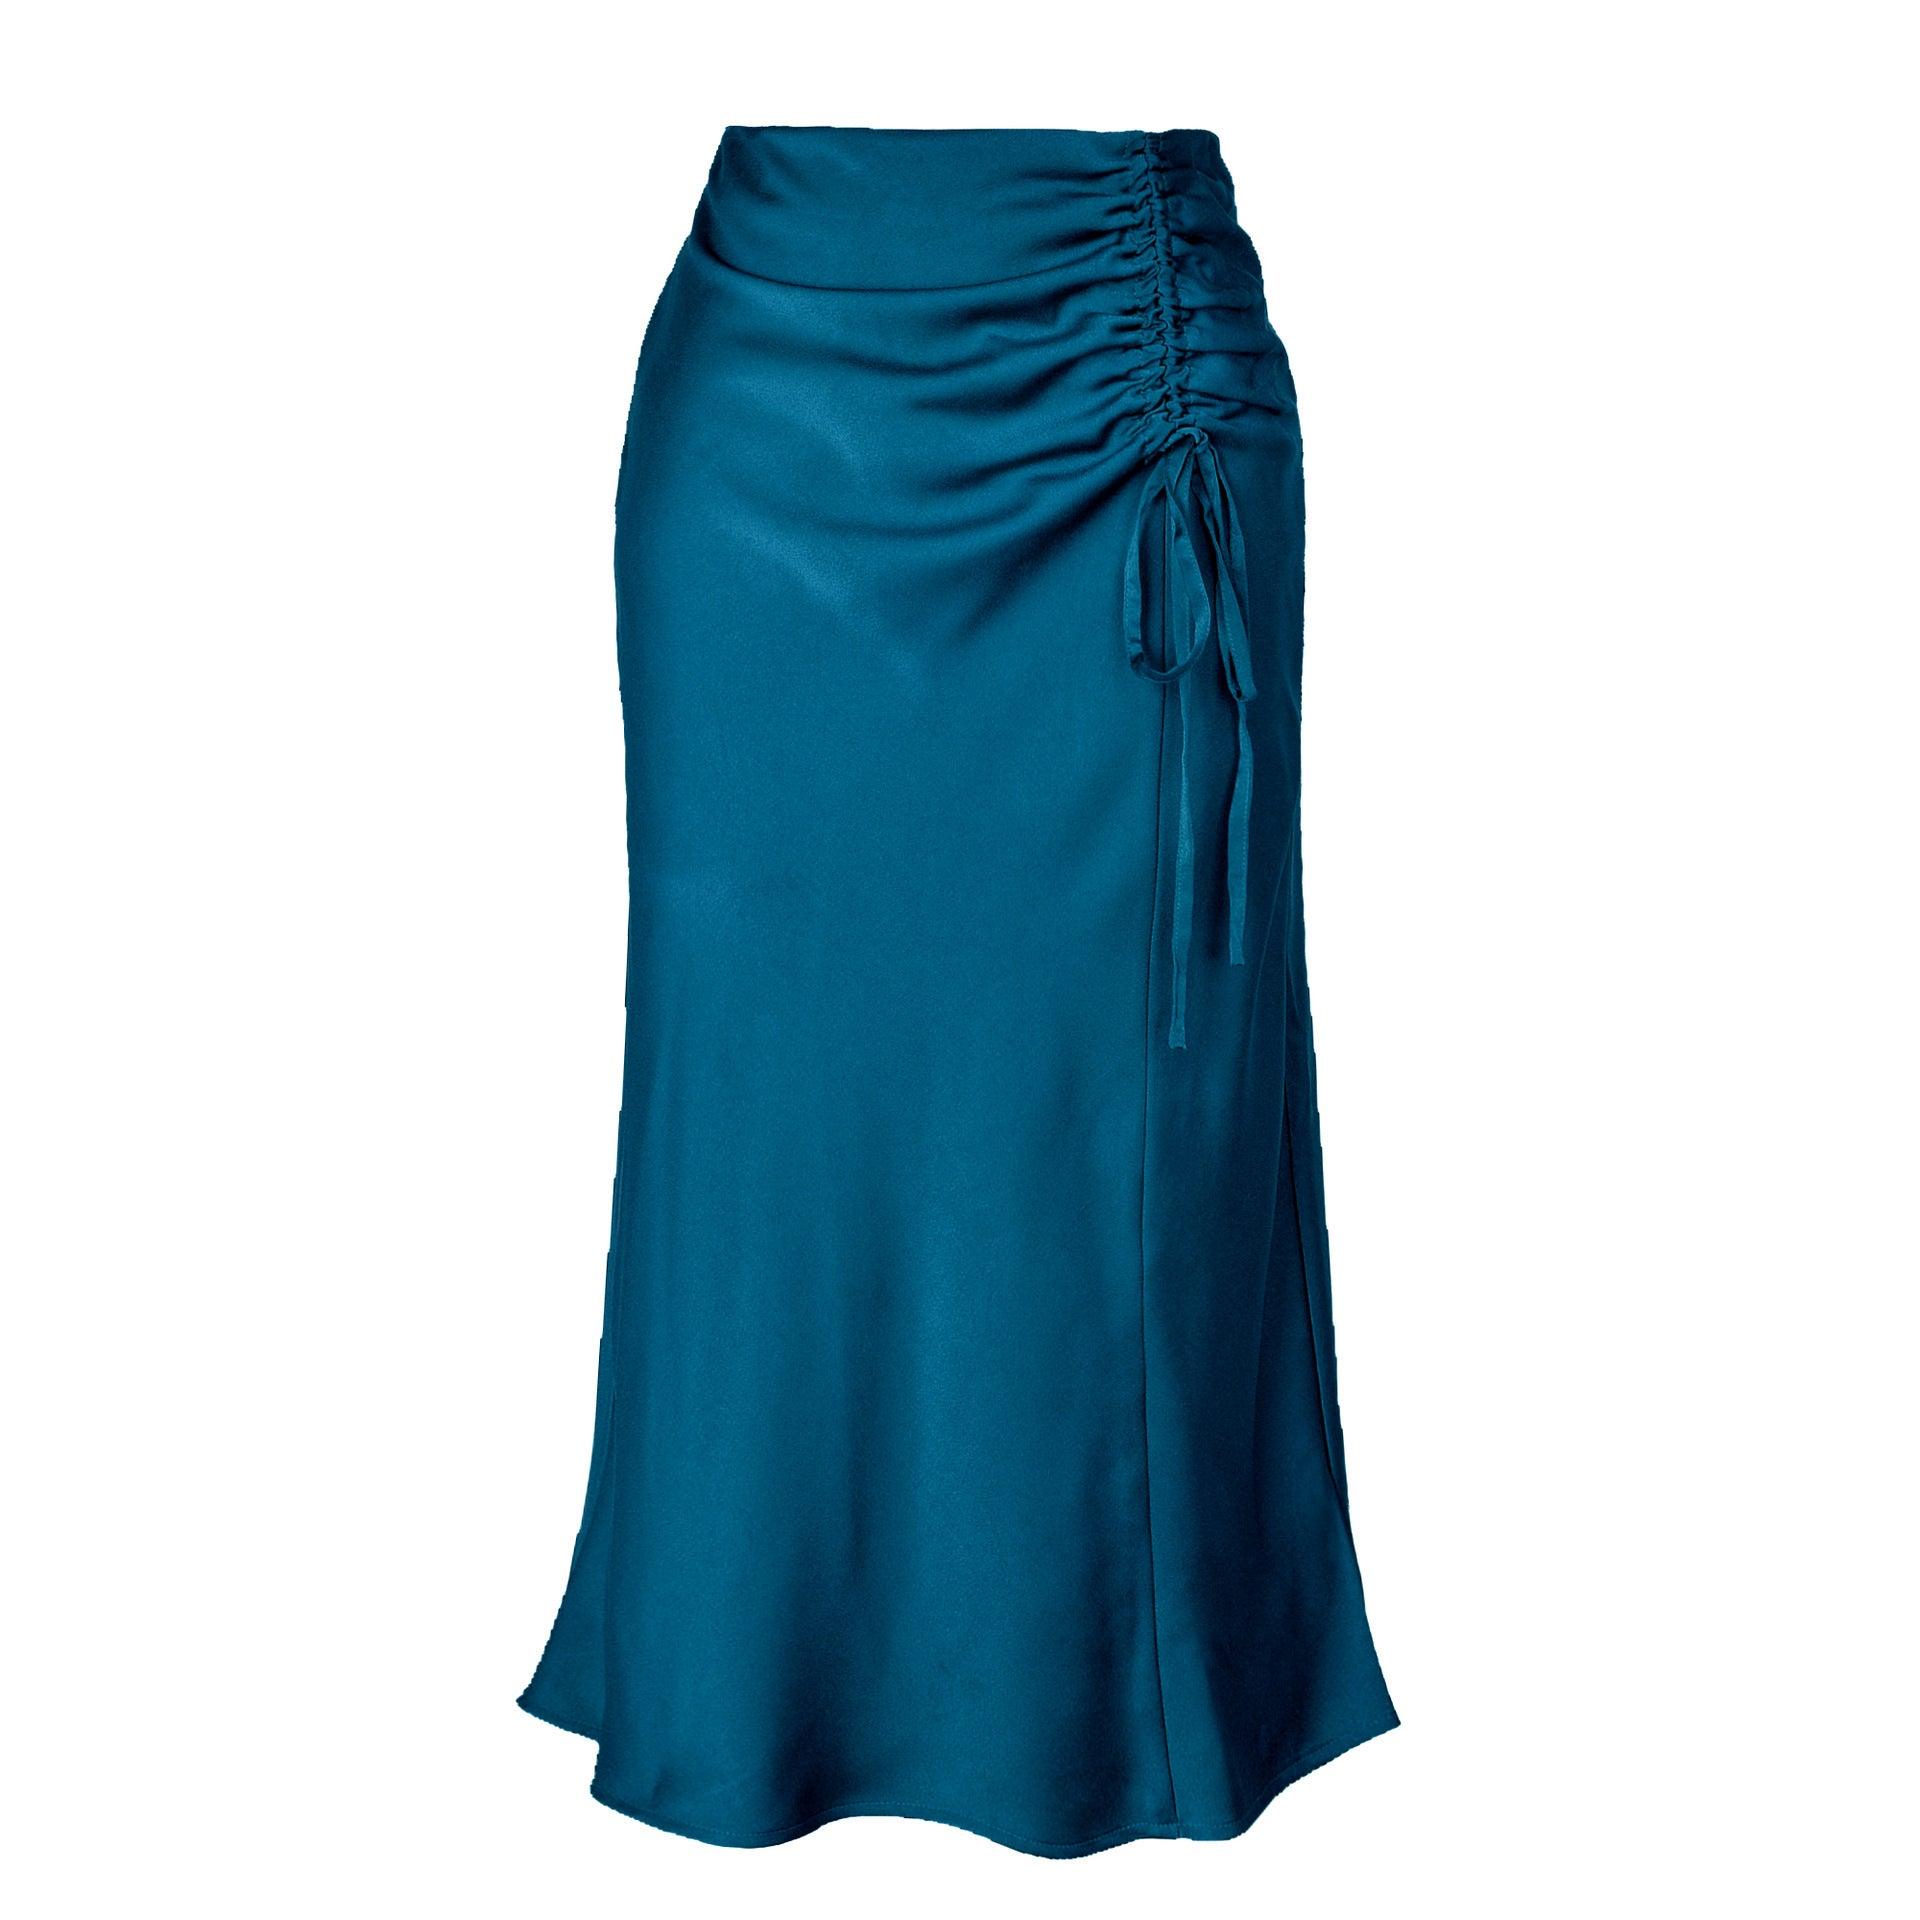 Sleek High-Waist Zippered Skirt – Slimming Design with Elegant Pleating - Glinyt